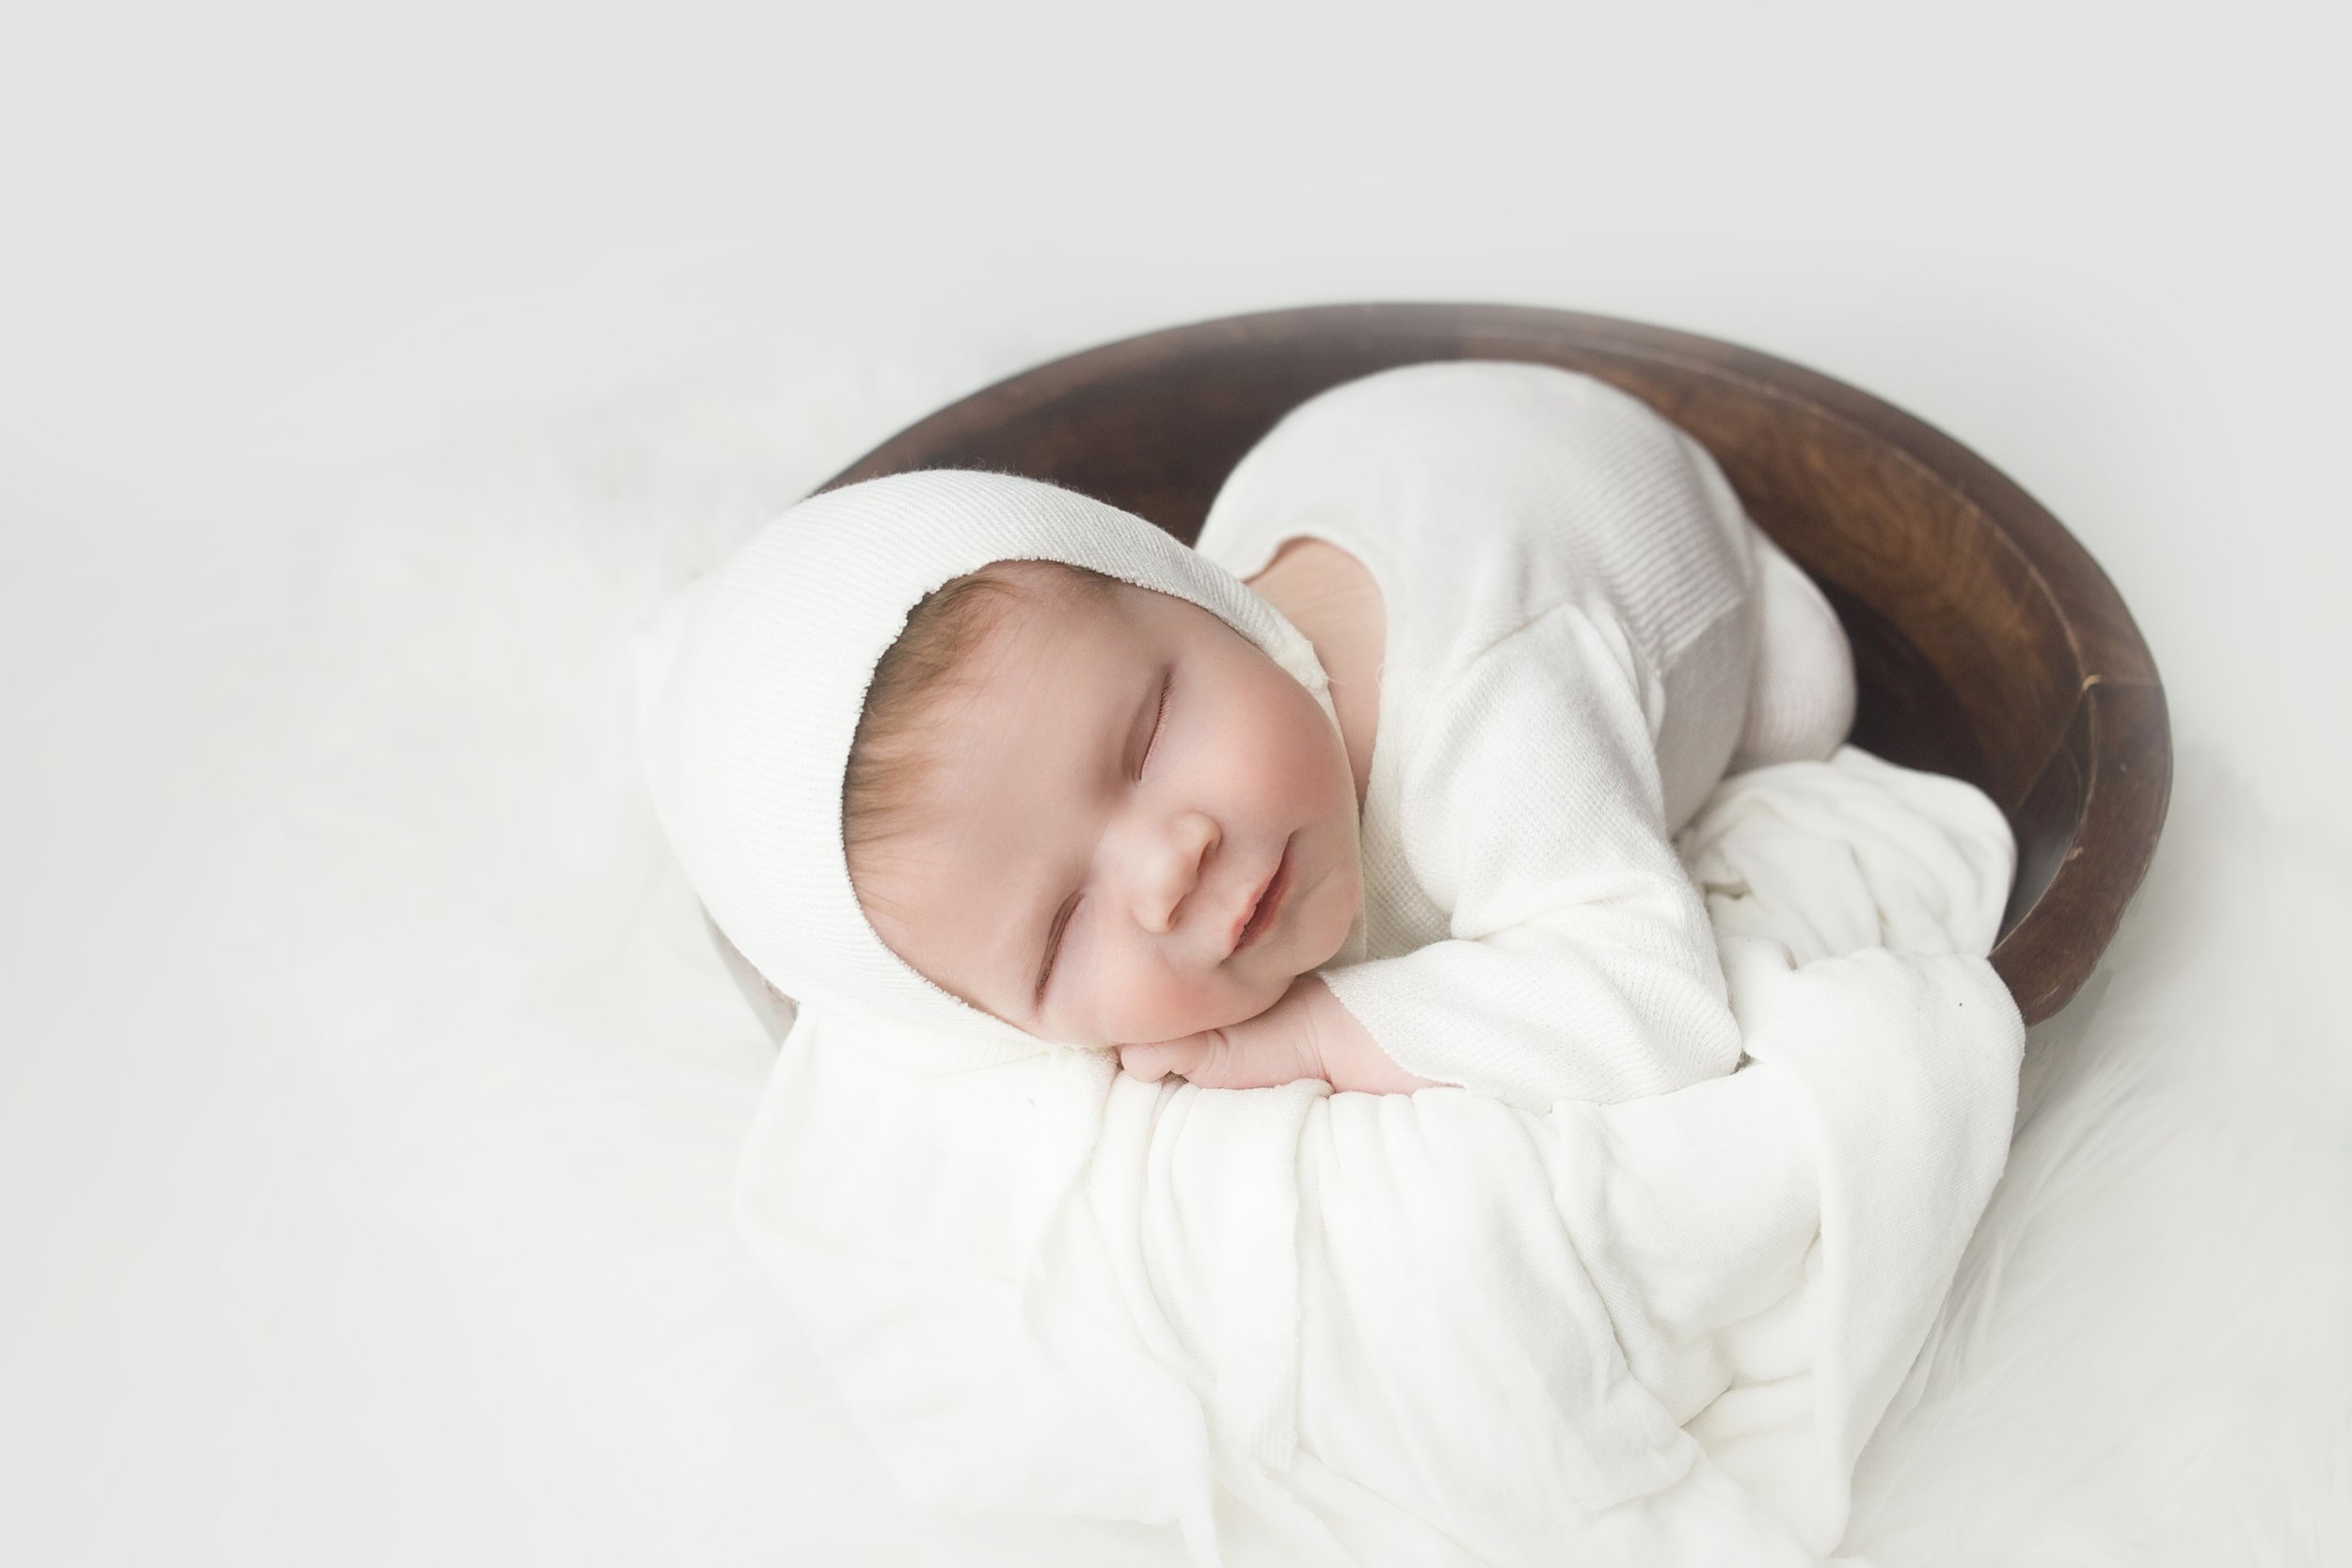 newborn boy, wearing white bonnet, sleeping in wood bowl during newborn photoshoot in mount juliet tennessee photography studio near me